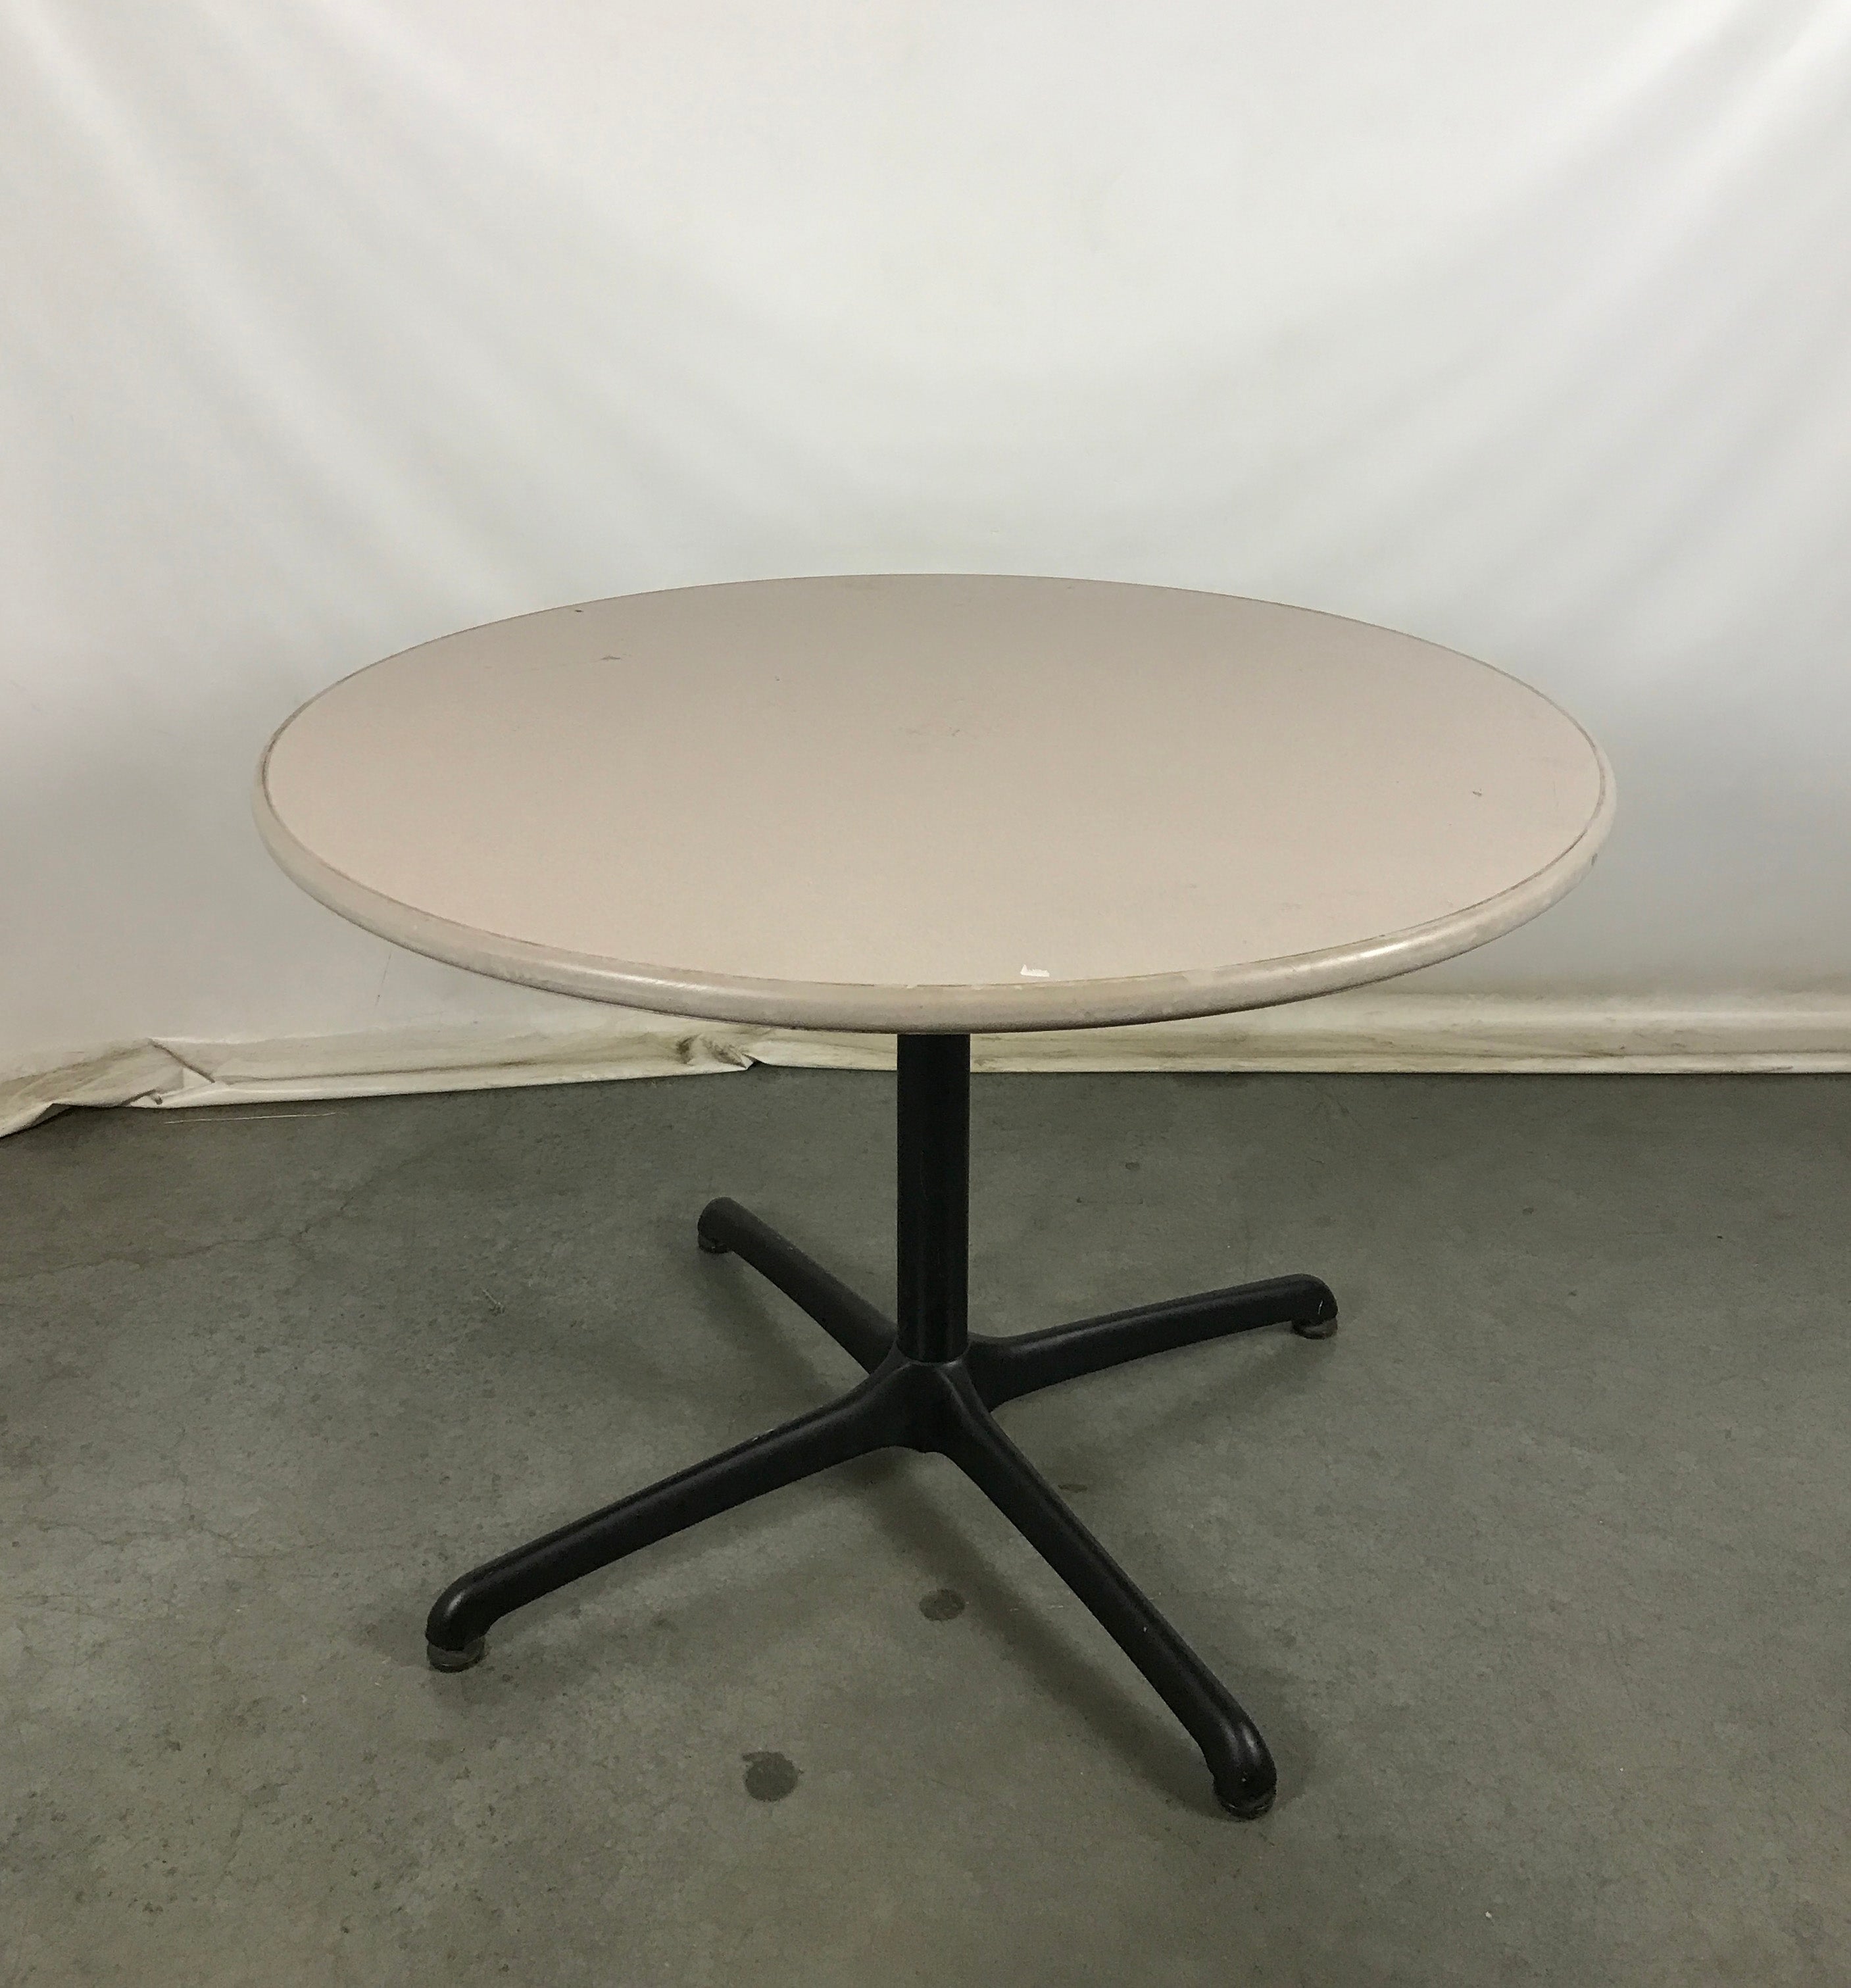 Steelcase Multipurpose Beige Round Table